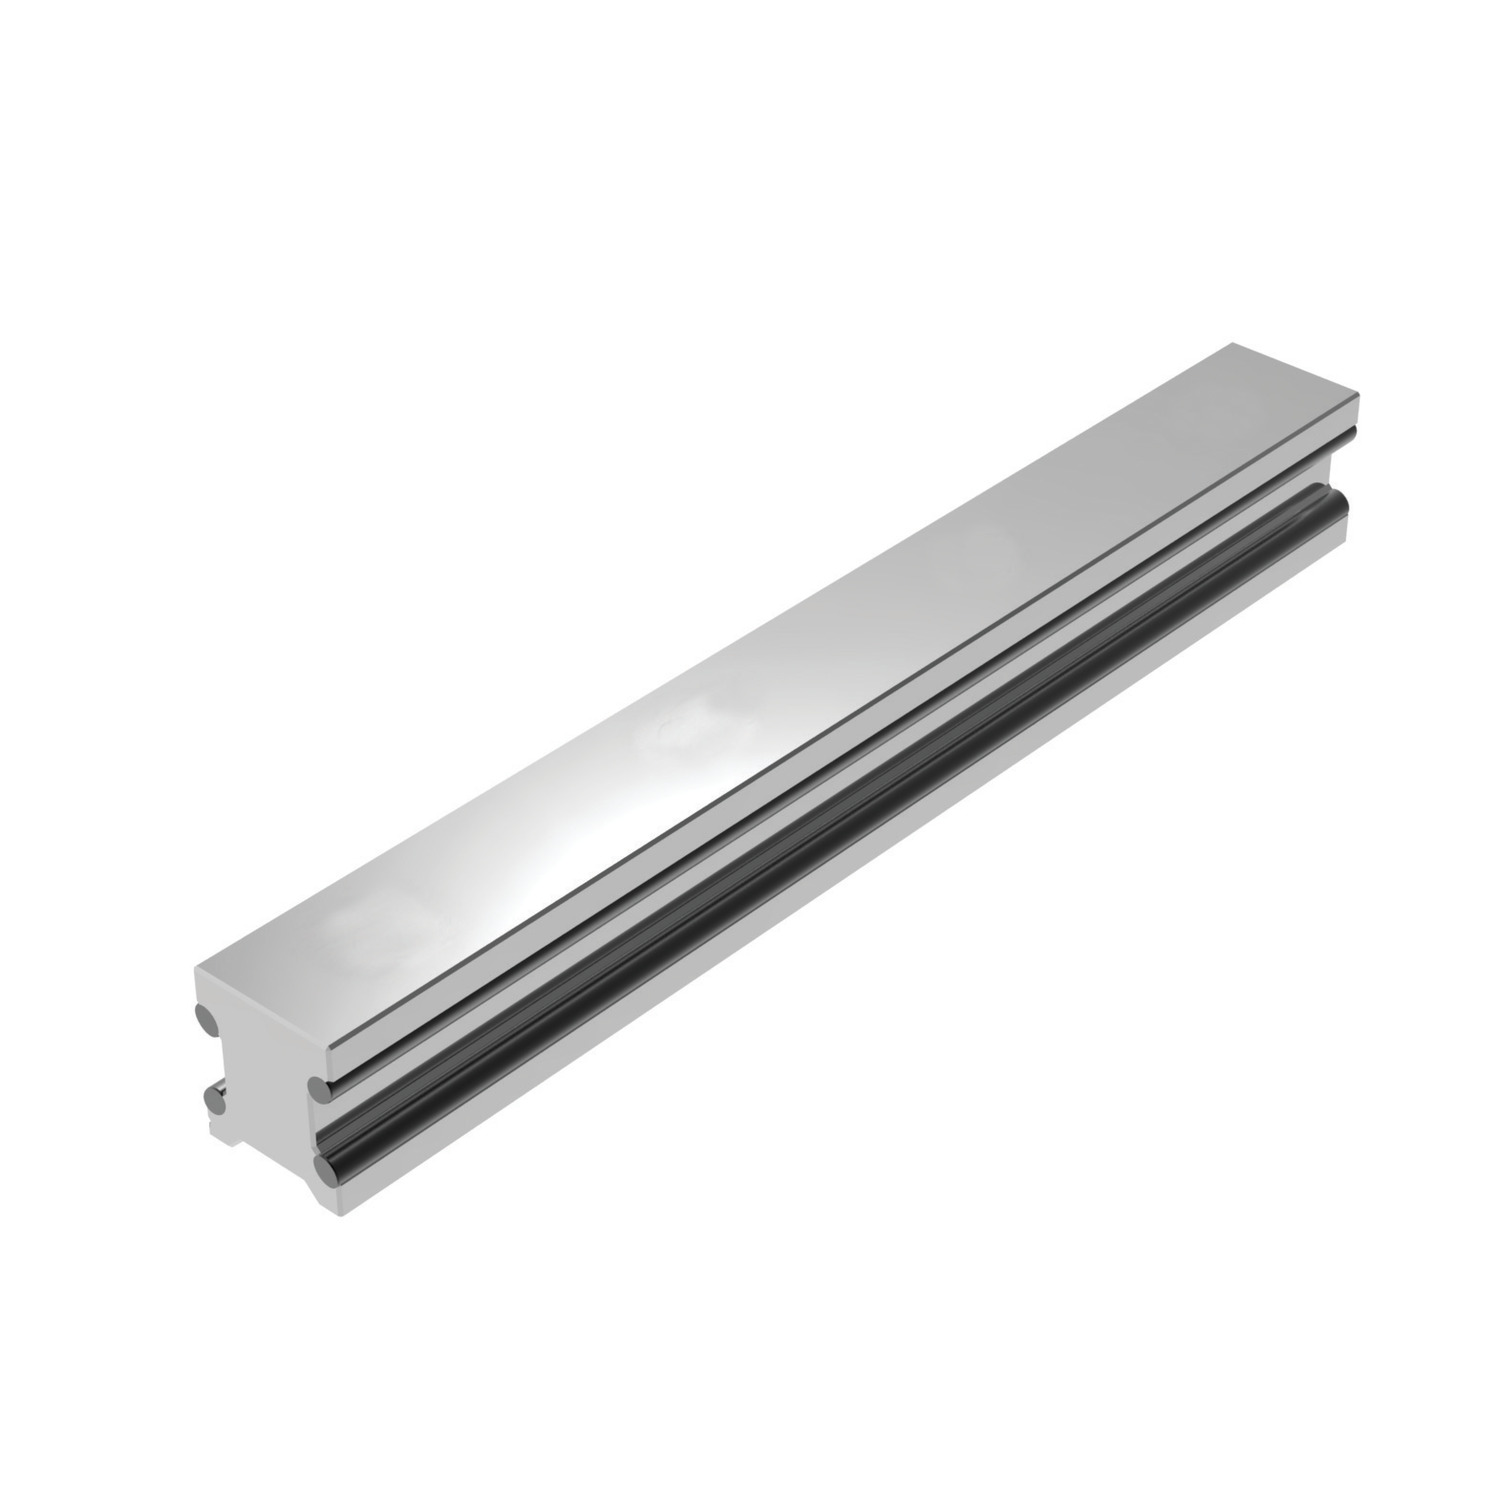 L1018.15 15mm Aluminium Linear Guide Rail